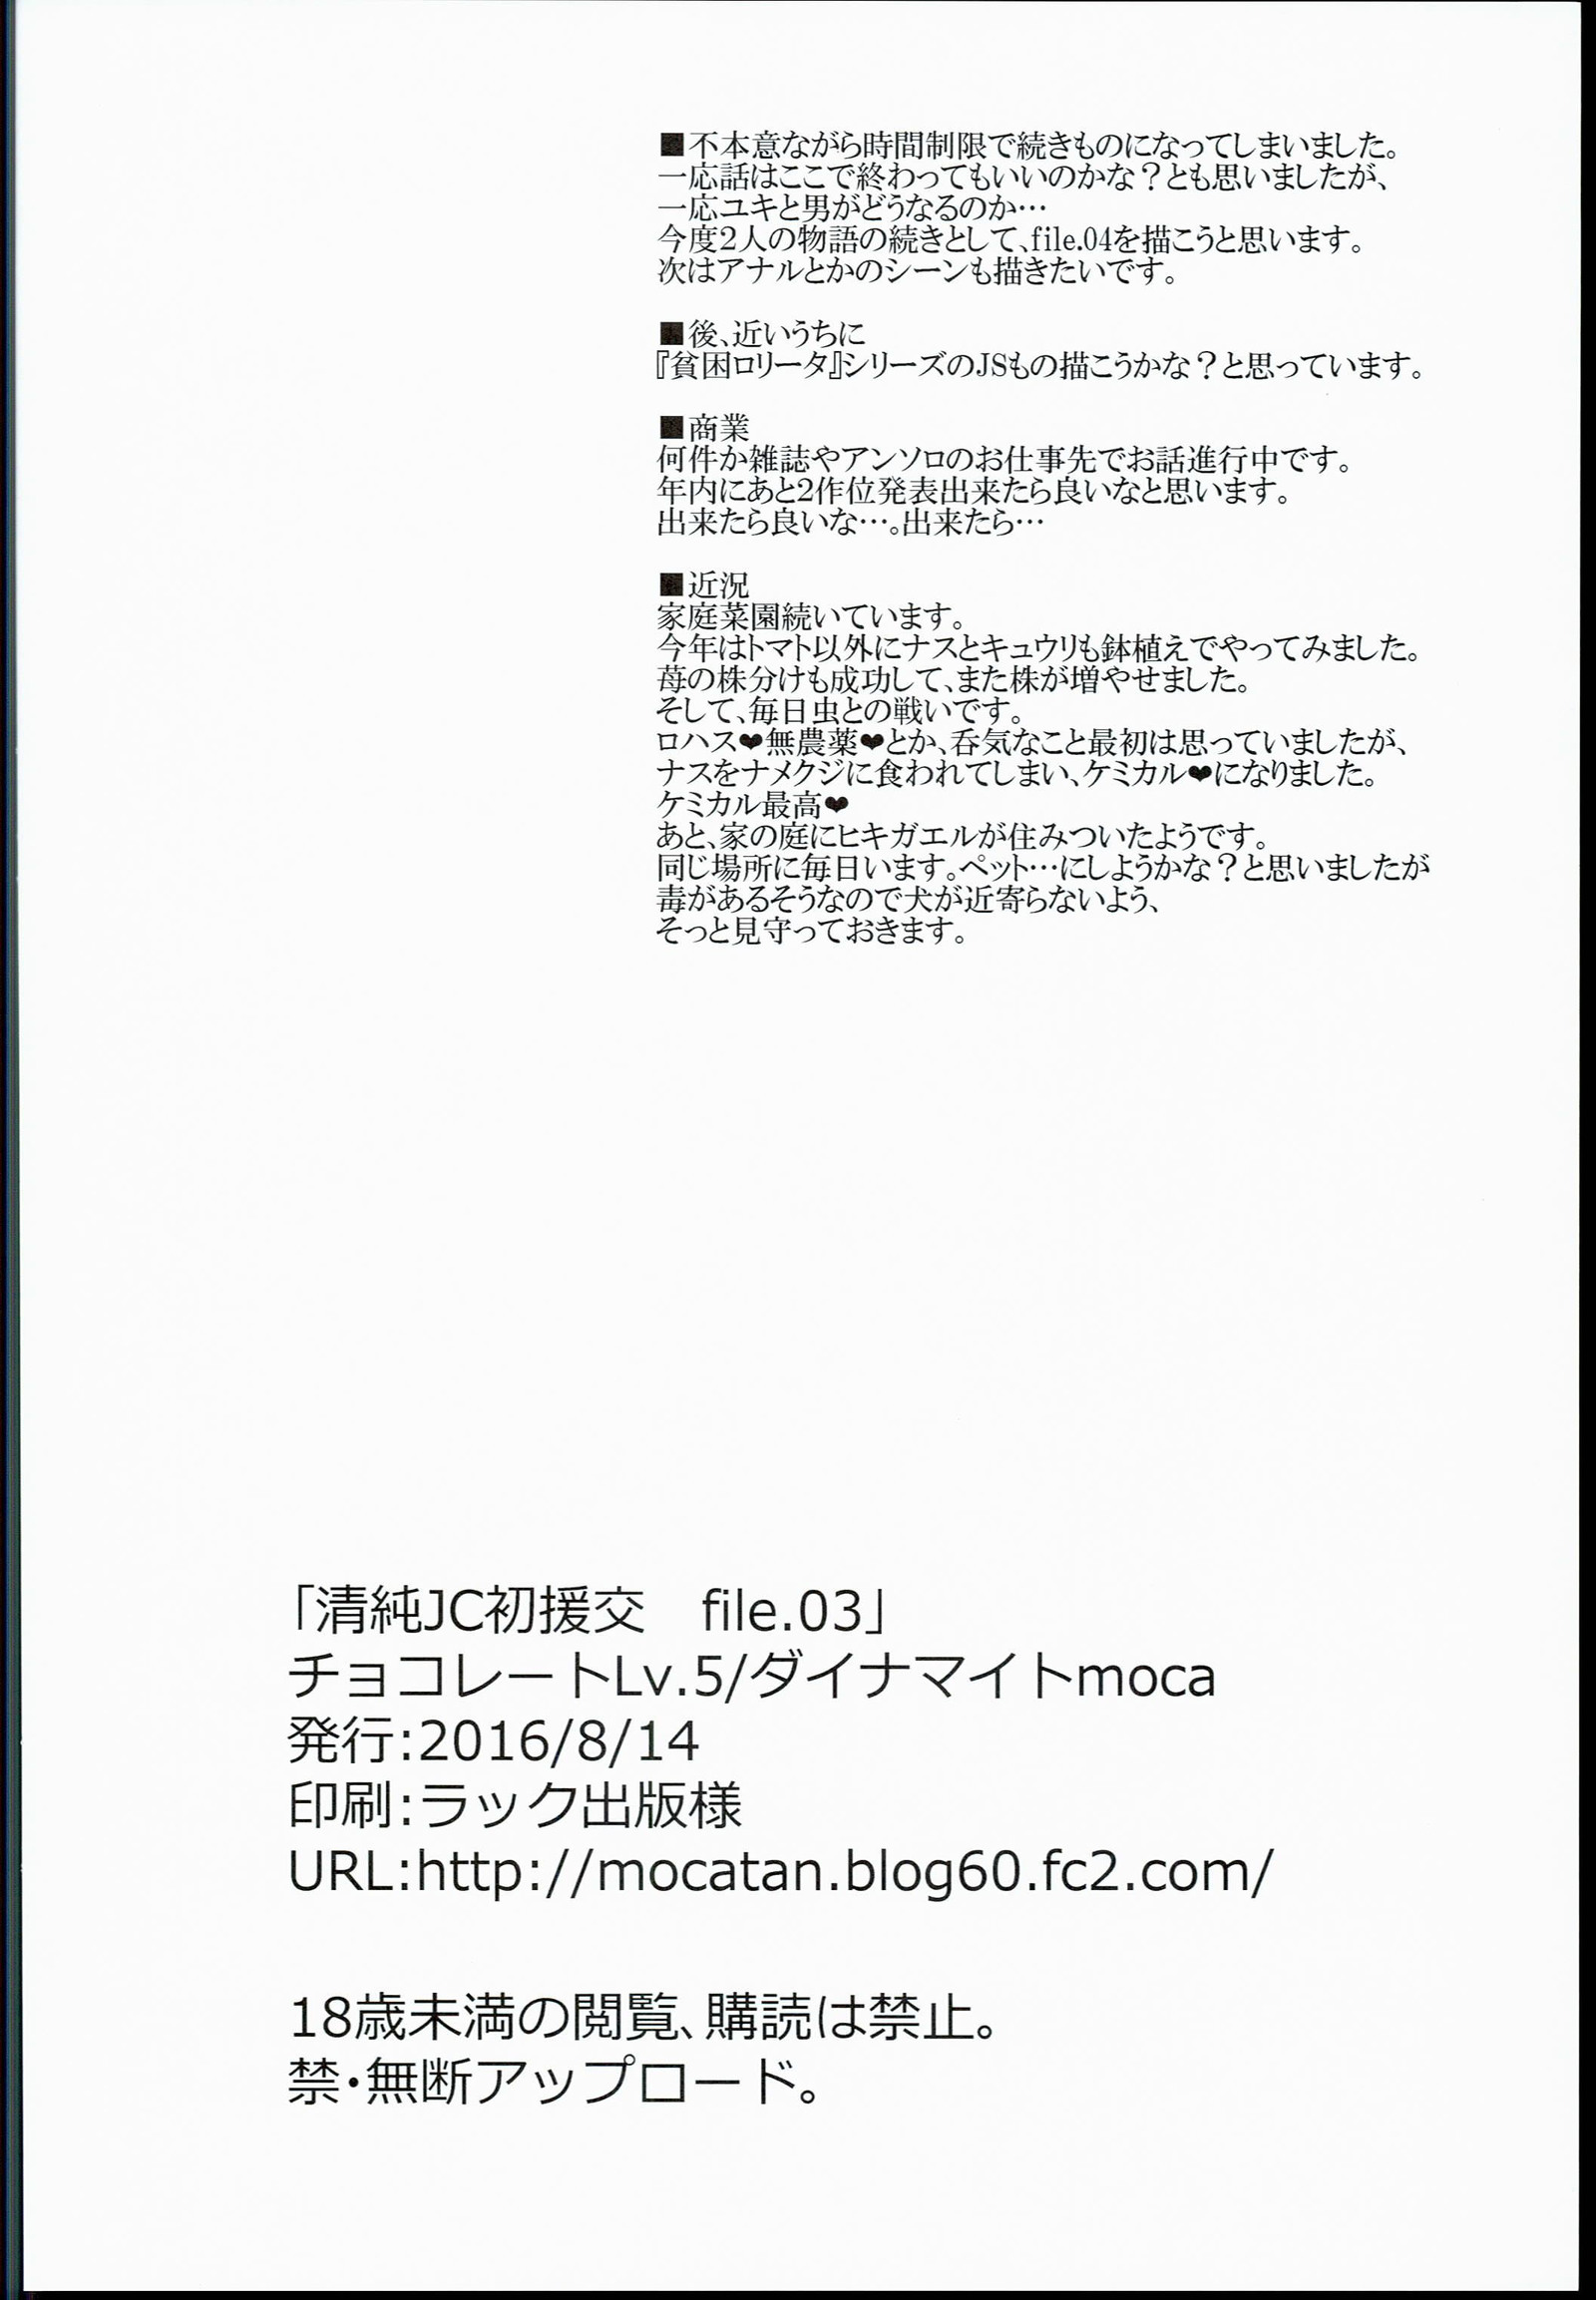 Seijun JC Hatsuenkou file.03